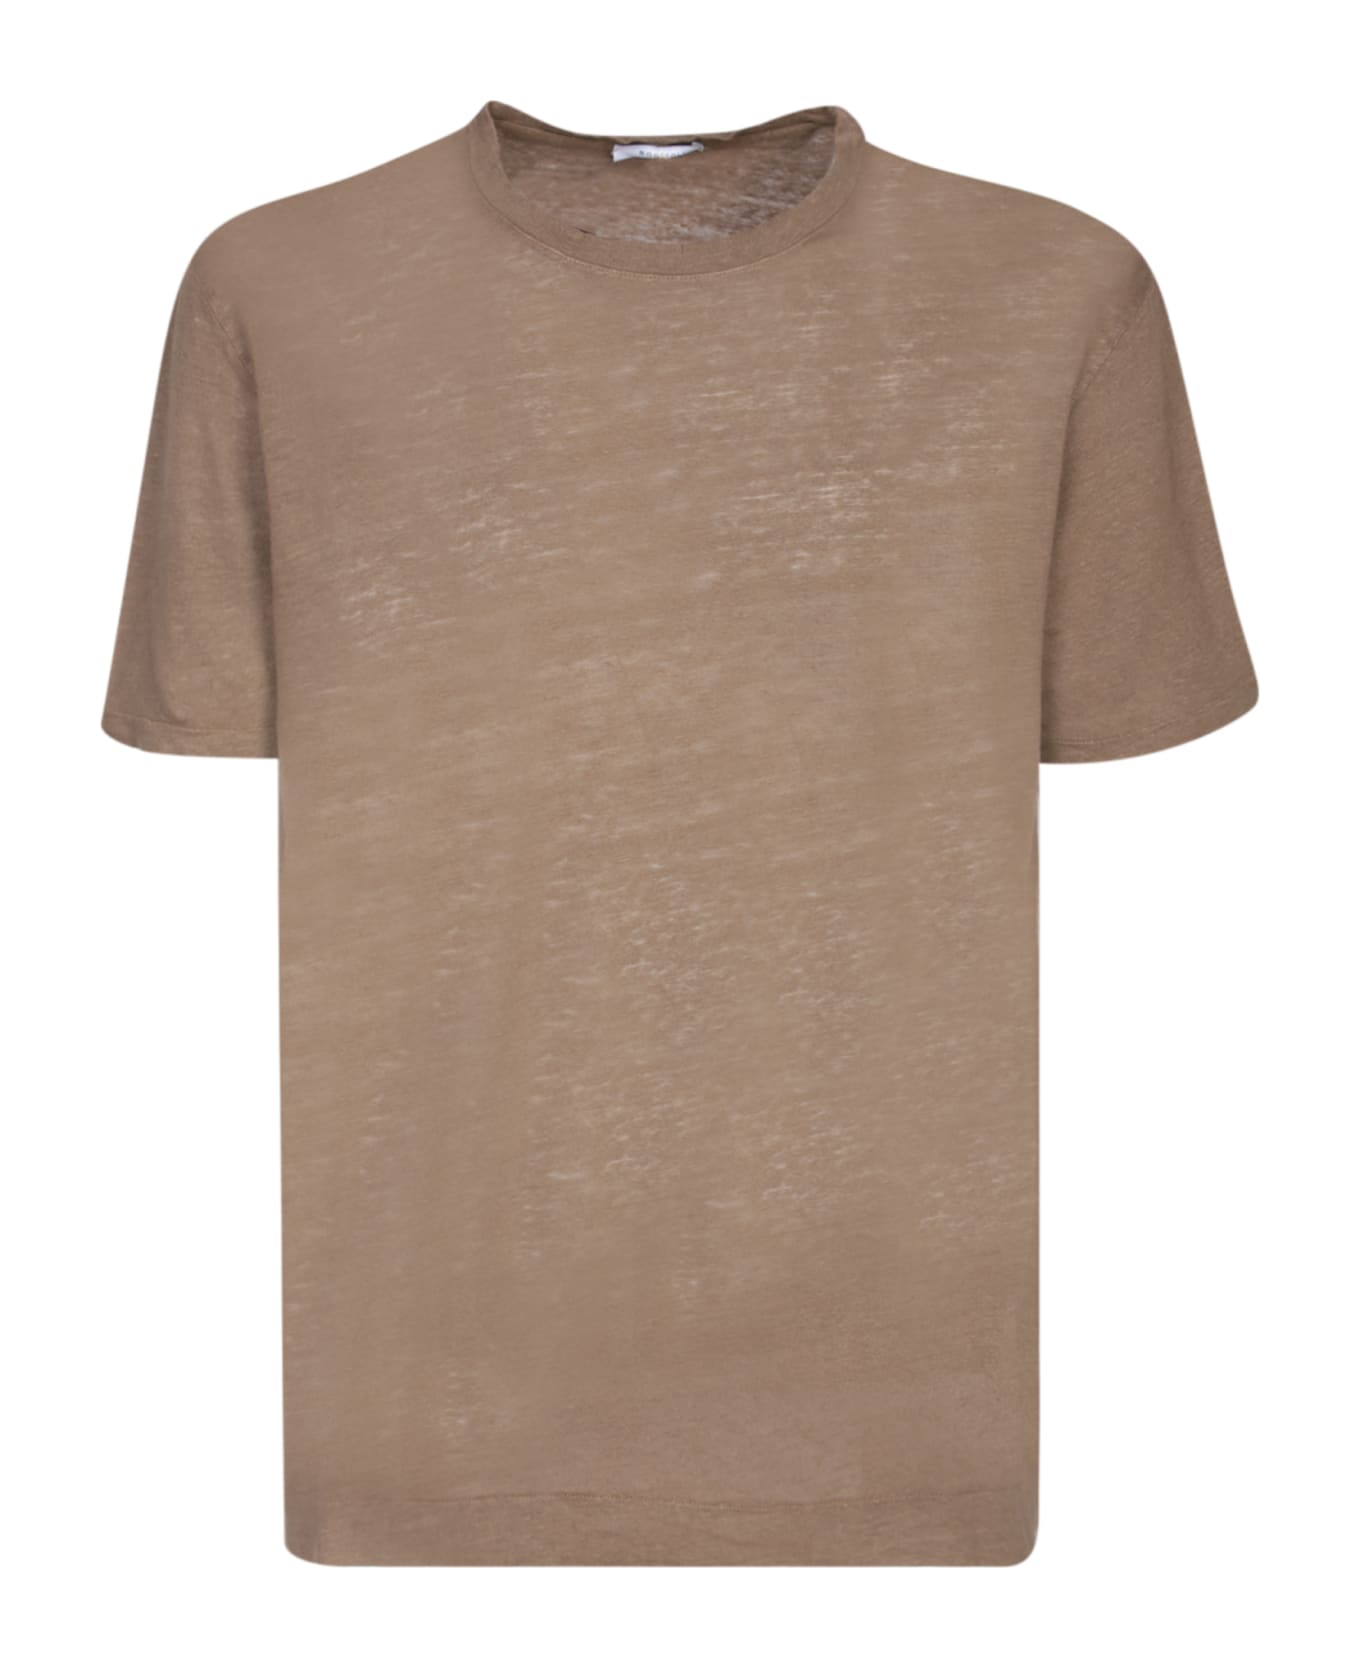 Boglioli Medium Beige T-shirt - Beige